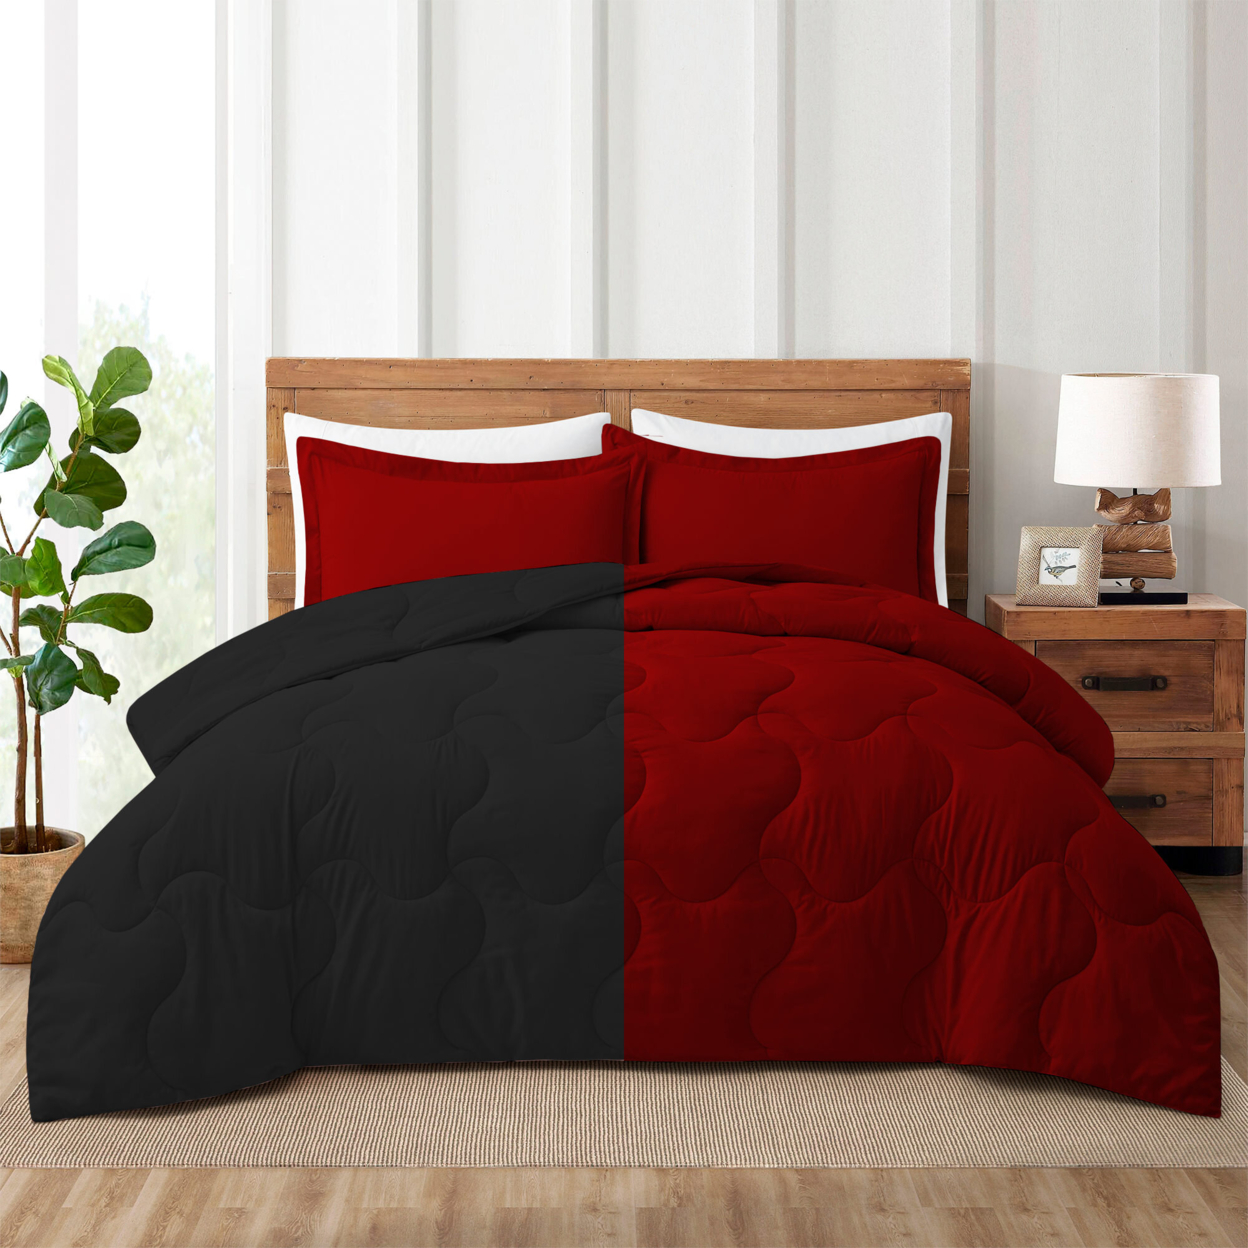 3 Or 2 Pieces Lightweight Reversible Comforter Set With Pillow Shams - Light Blue/Navy Blue, Full/Queen